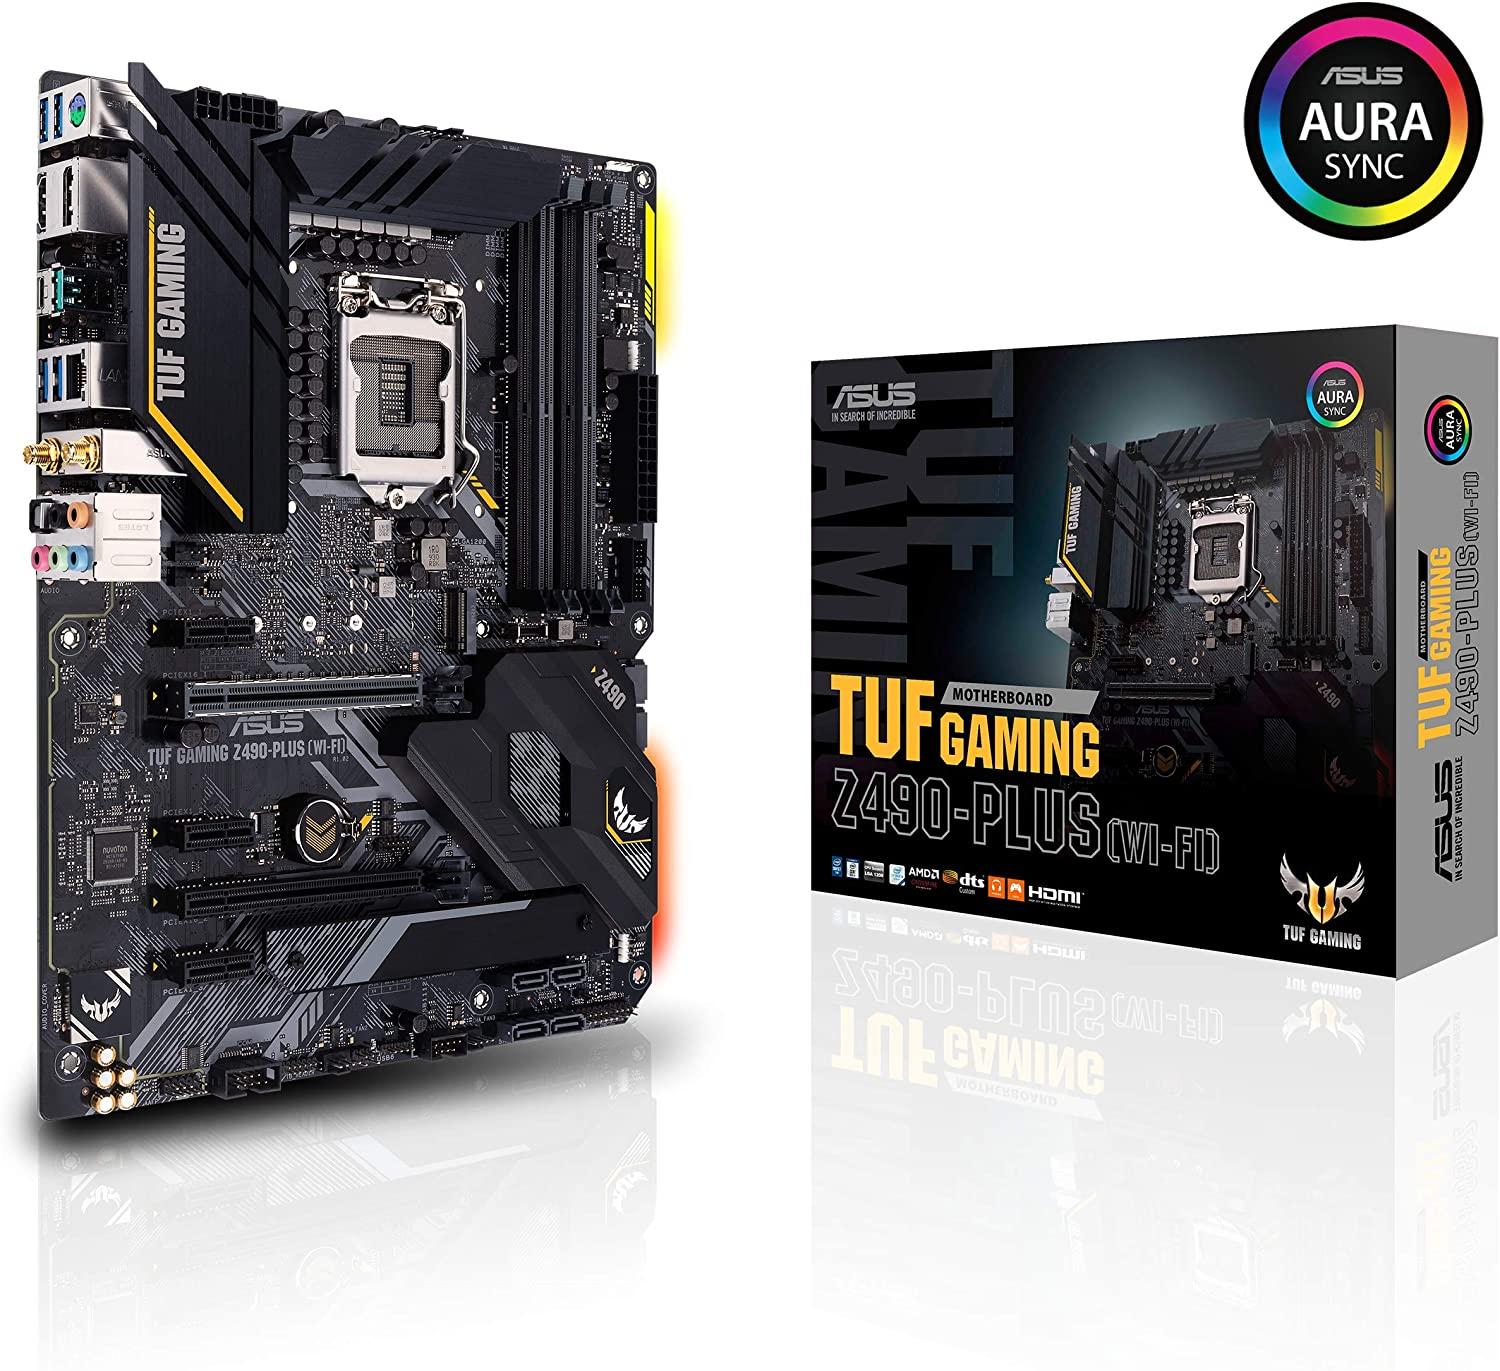 ASUS TUF Gaming Z490-Plus Wi-Fi 6 ATX LGA 1200 Motherboard for $167.19 Shipped